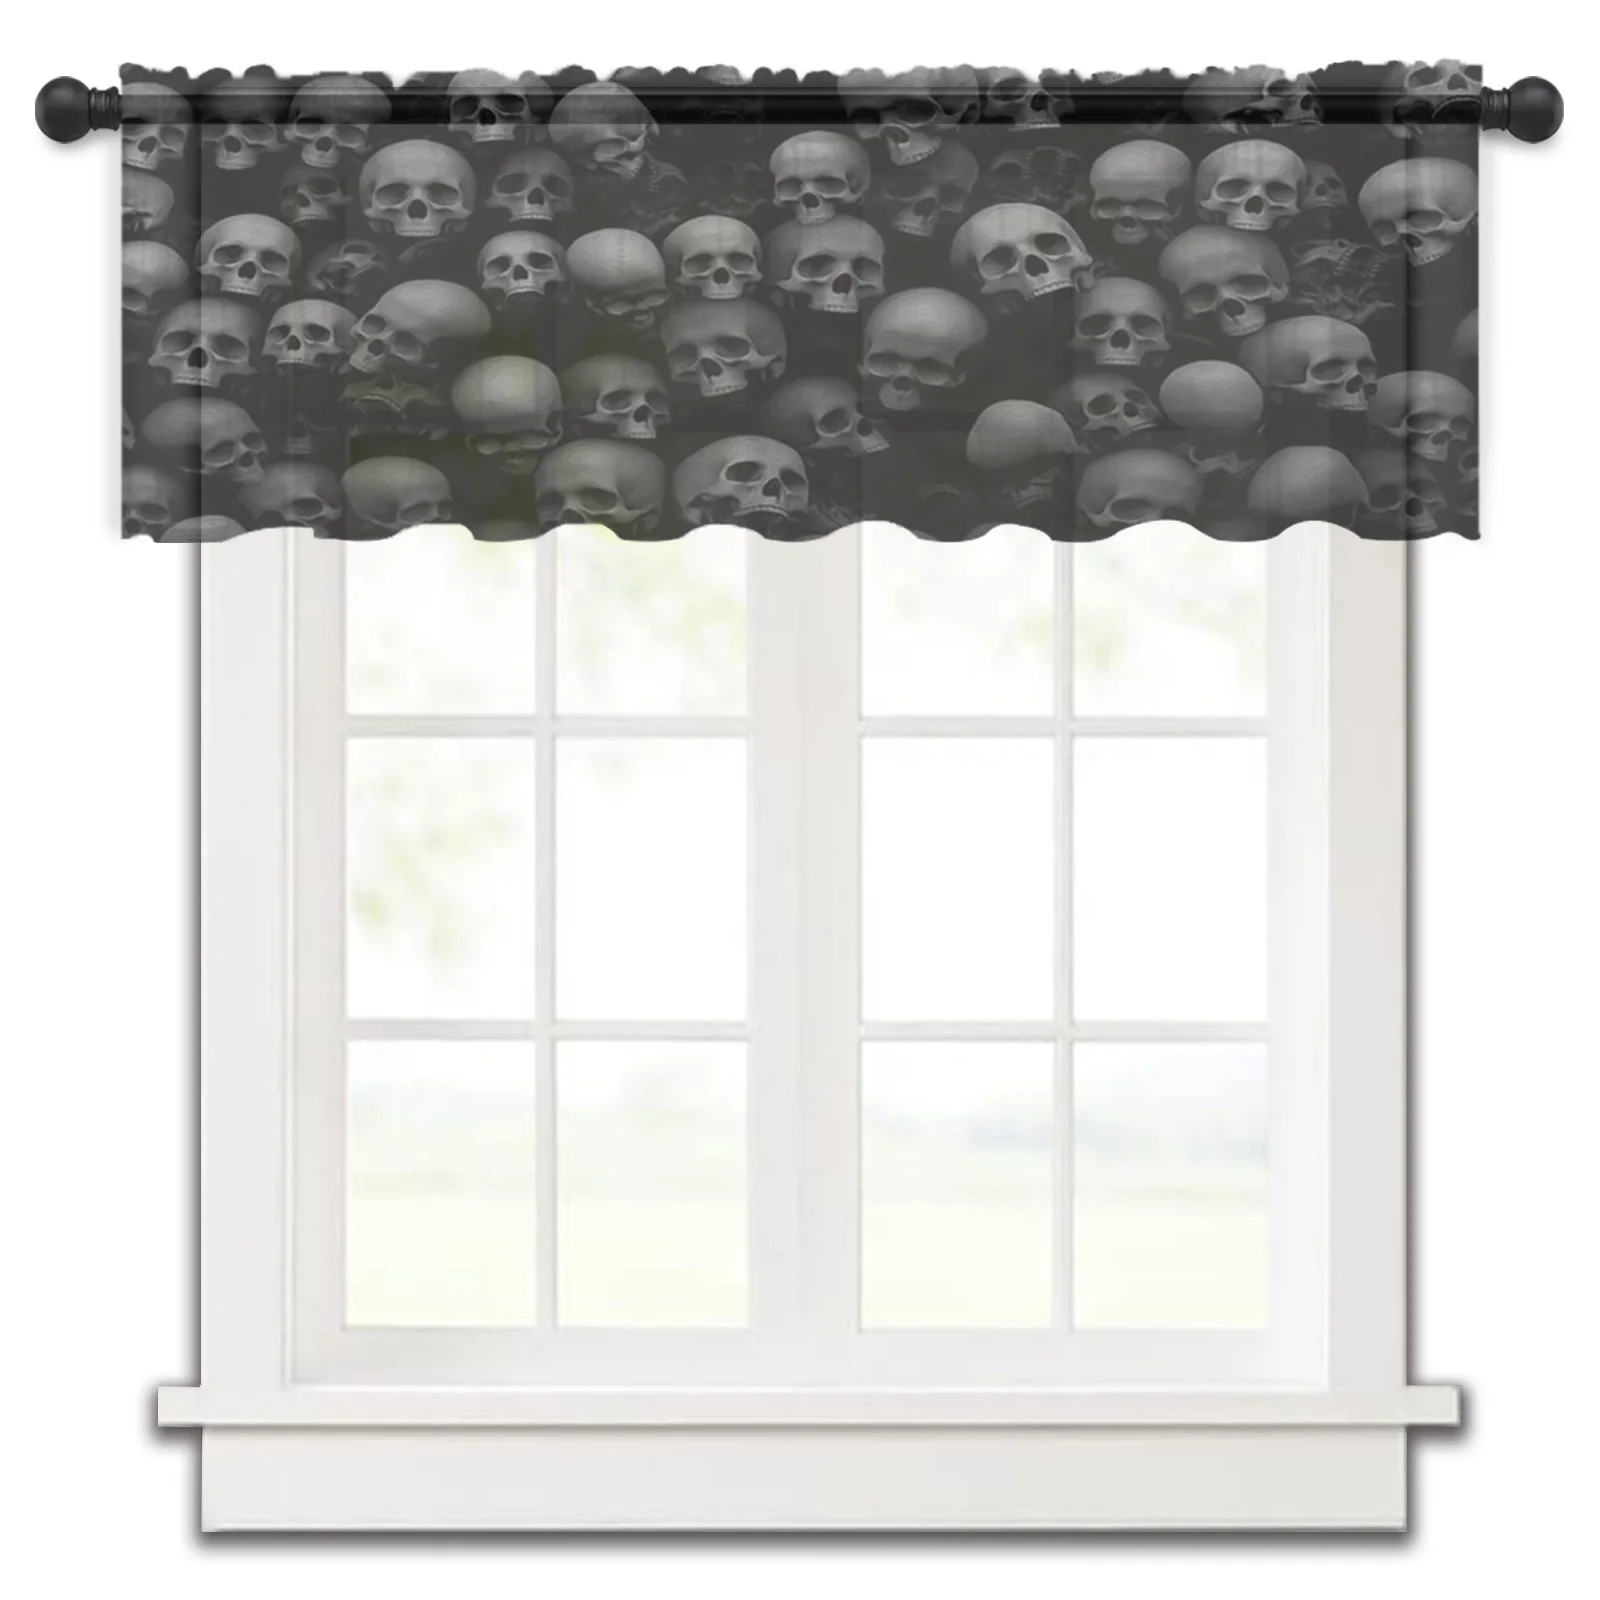 

Skull Black Dense Tulle Kitchen Small Window Curtain Valance Sheer Short Curtain Bedroom Living Room Home Decor Voile Drapes